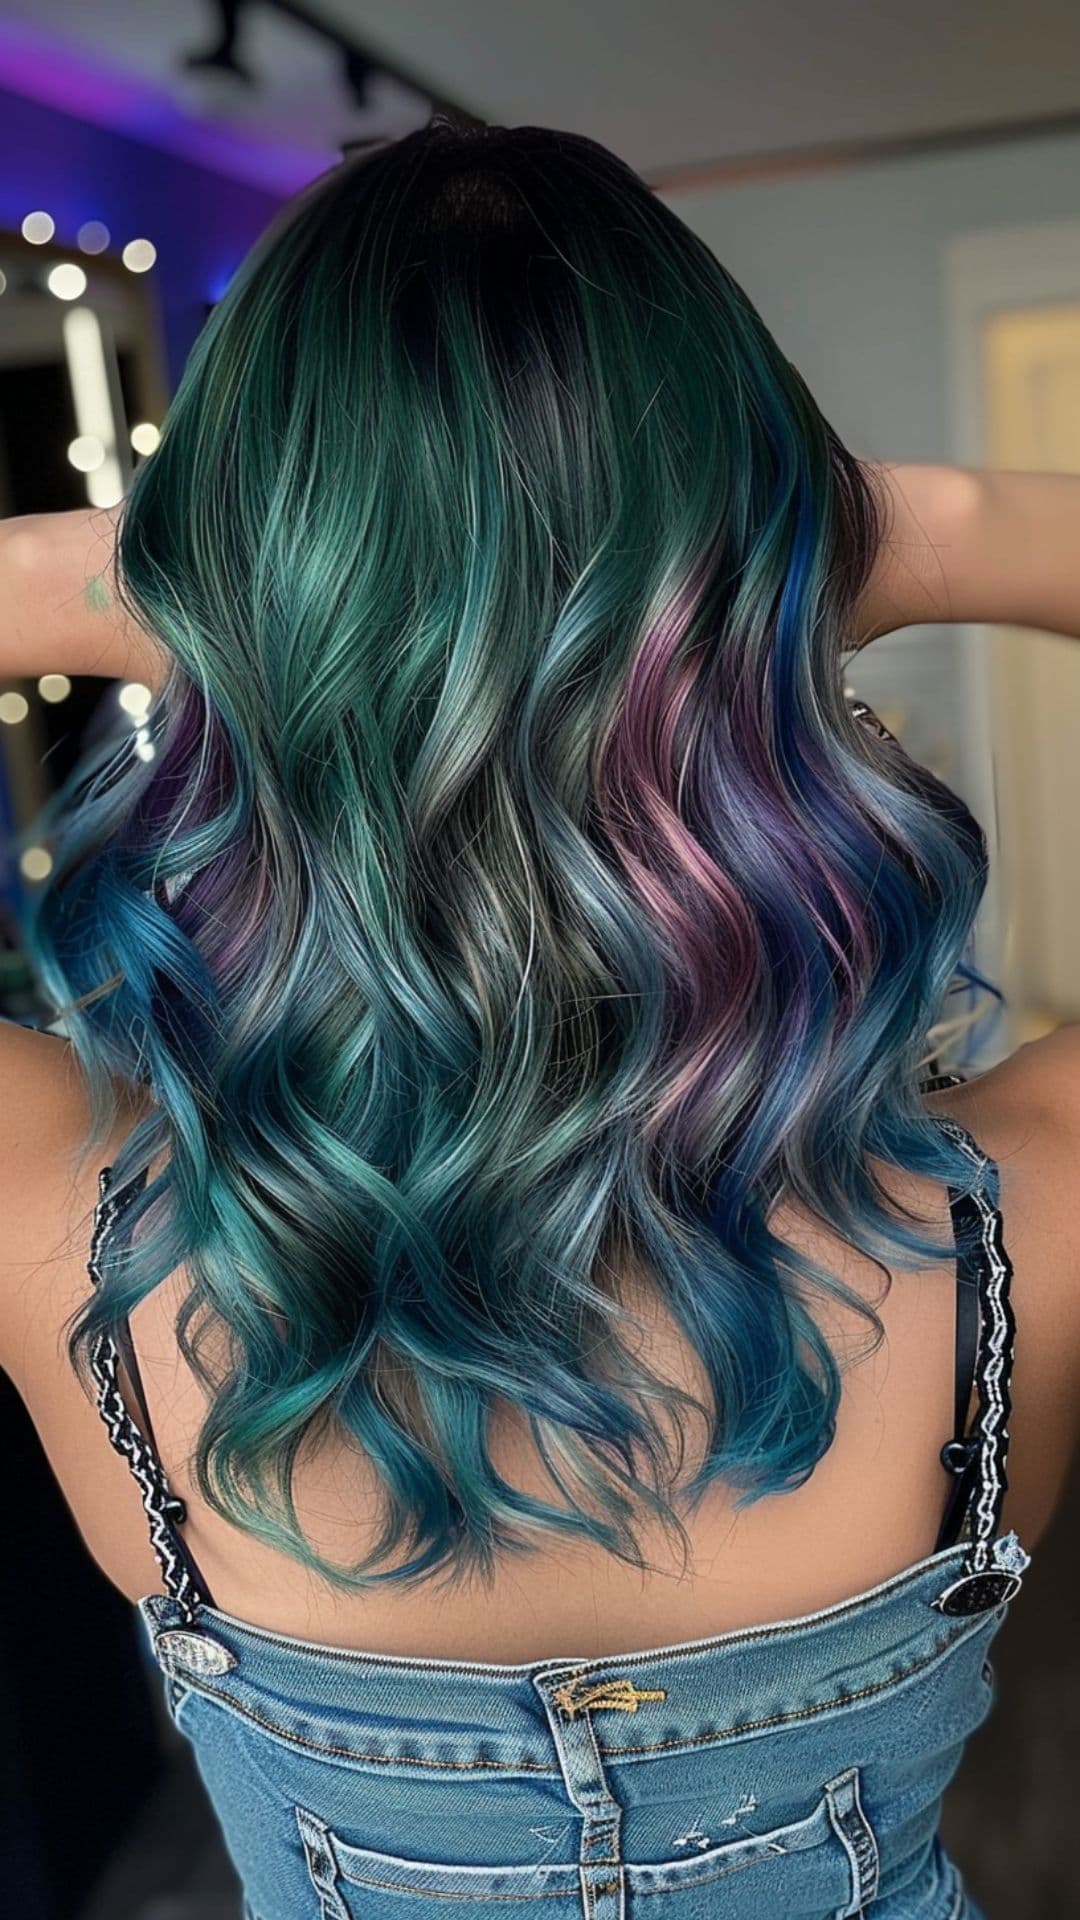 A woman modelling an aurora borealis insipred hair color.